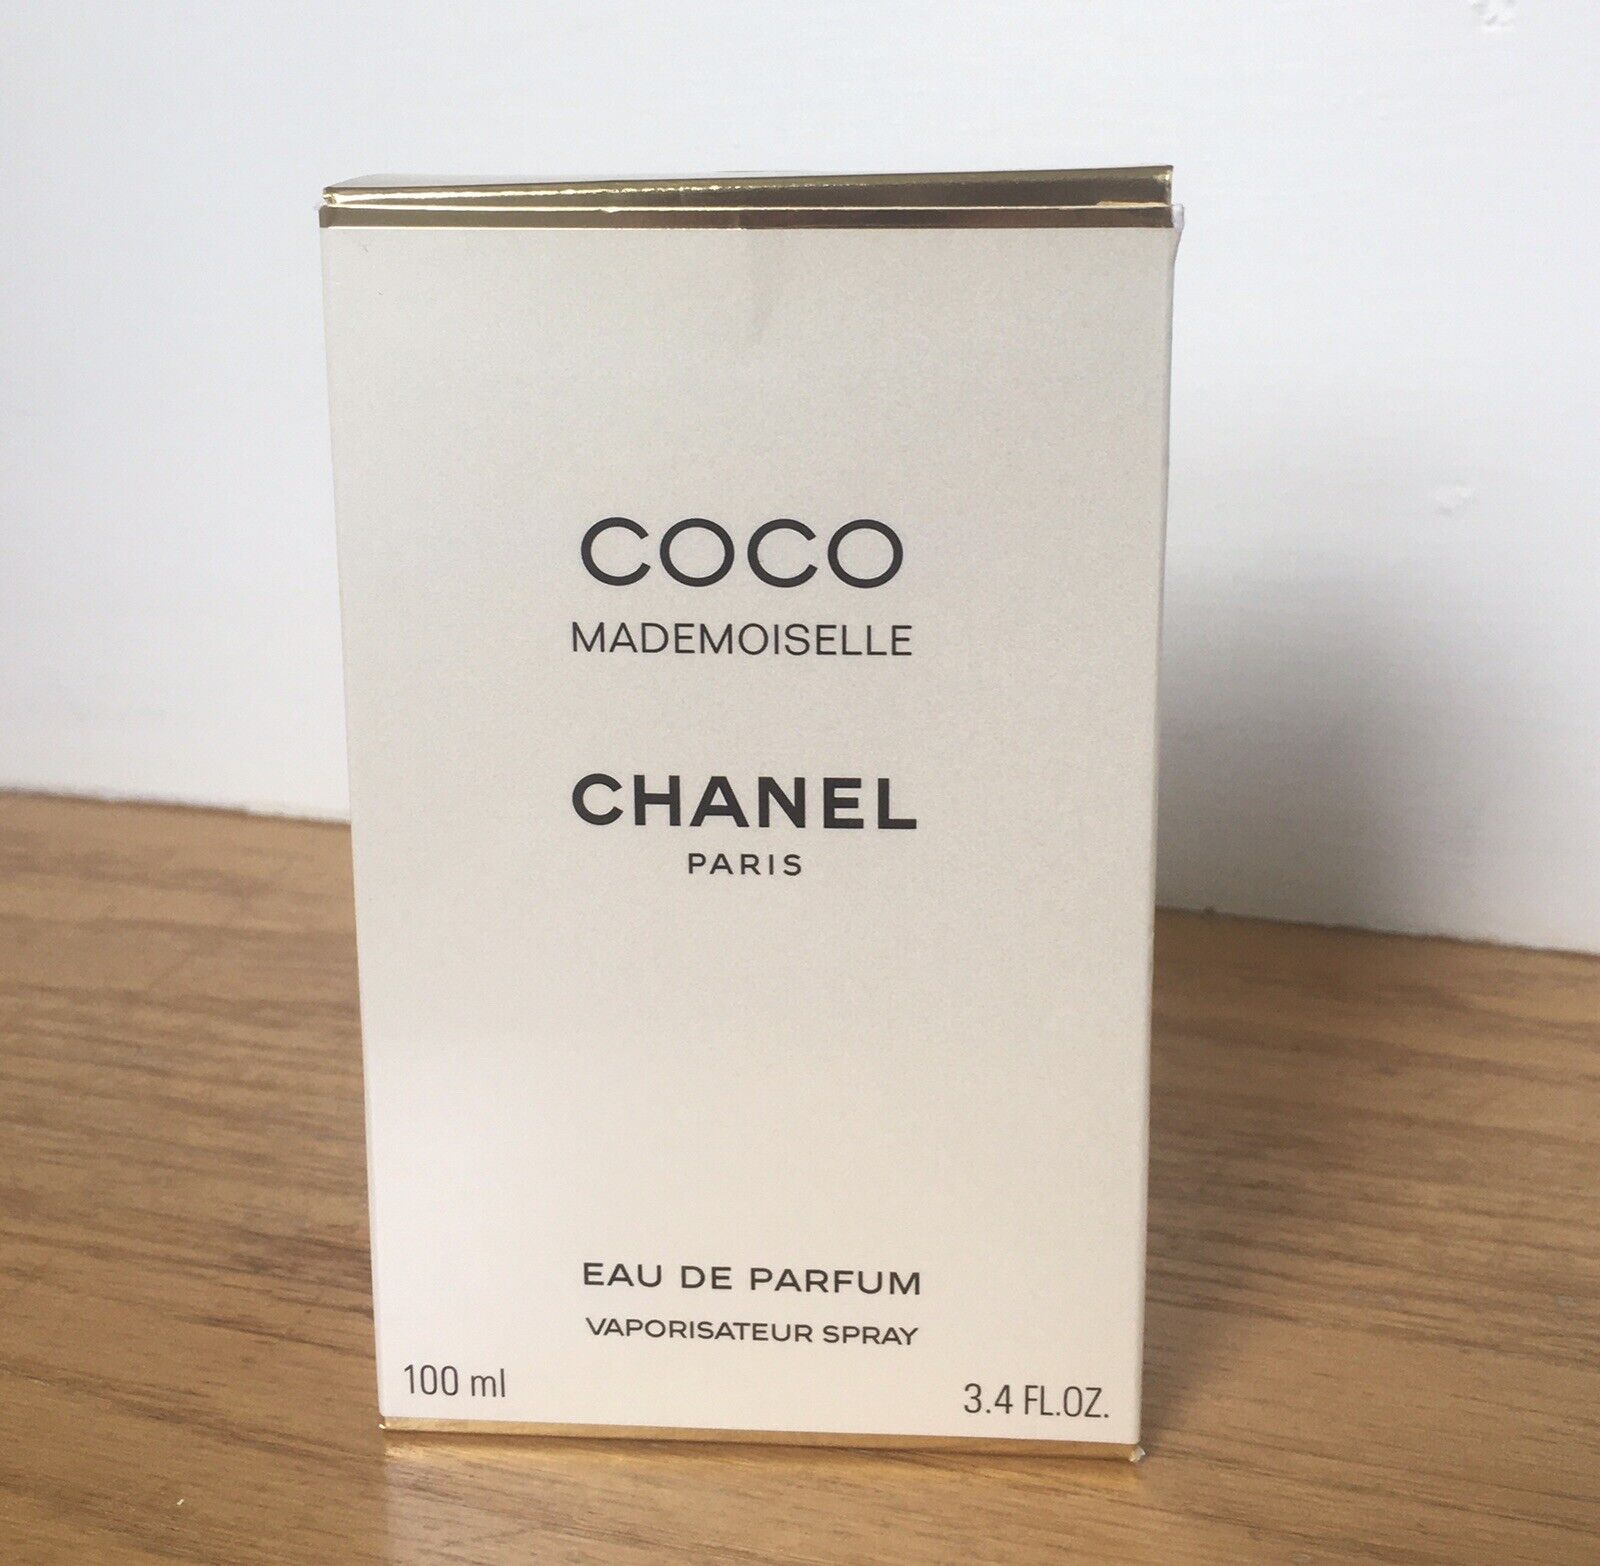 Coco Chanel Mademoiselle Paris Empty Box 100 ml